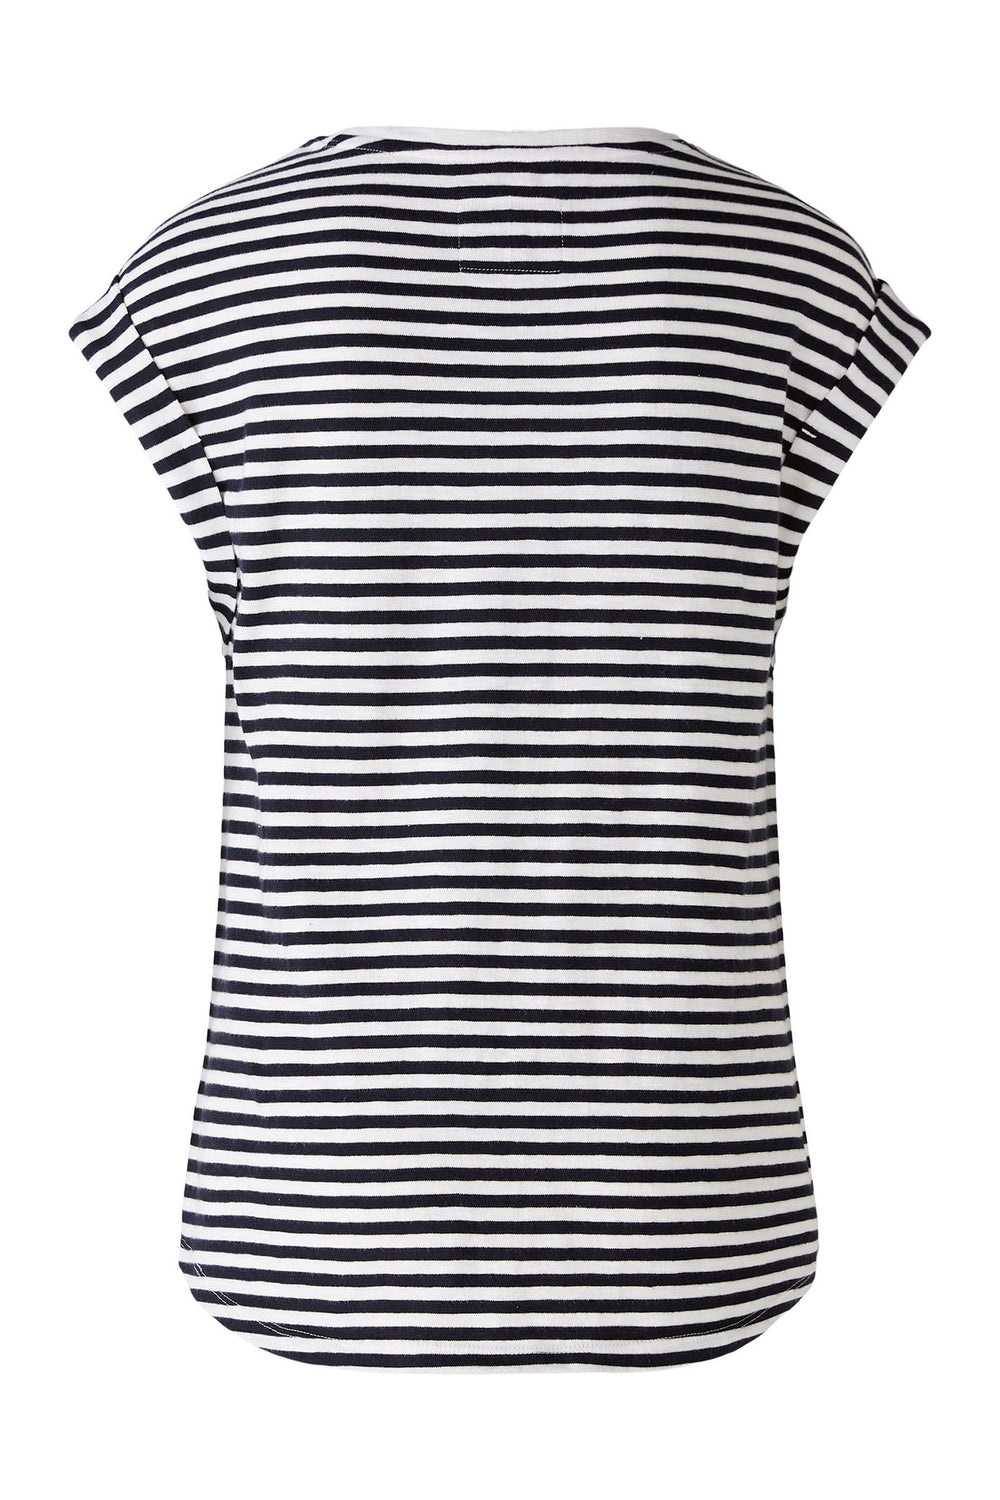 Oui 78872 Navy White Stripe Cap Sleeve T-Shirt  - Olivia Grace Fashion